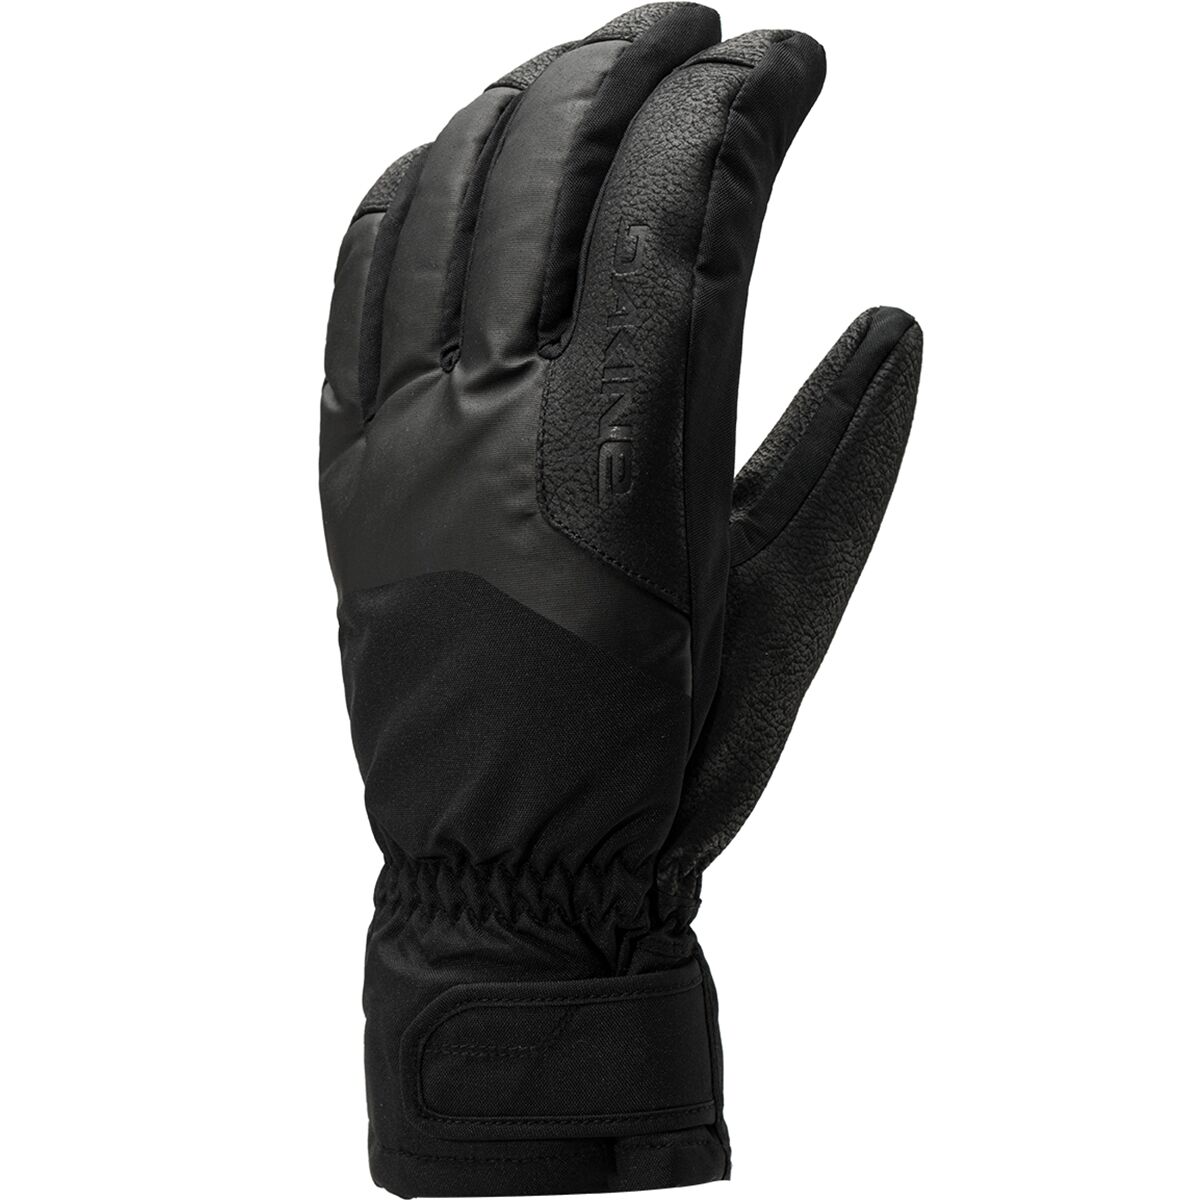 DAKINE Nova Short Glove - Men's Black